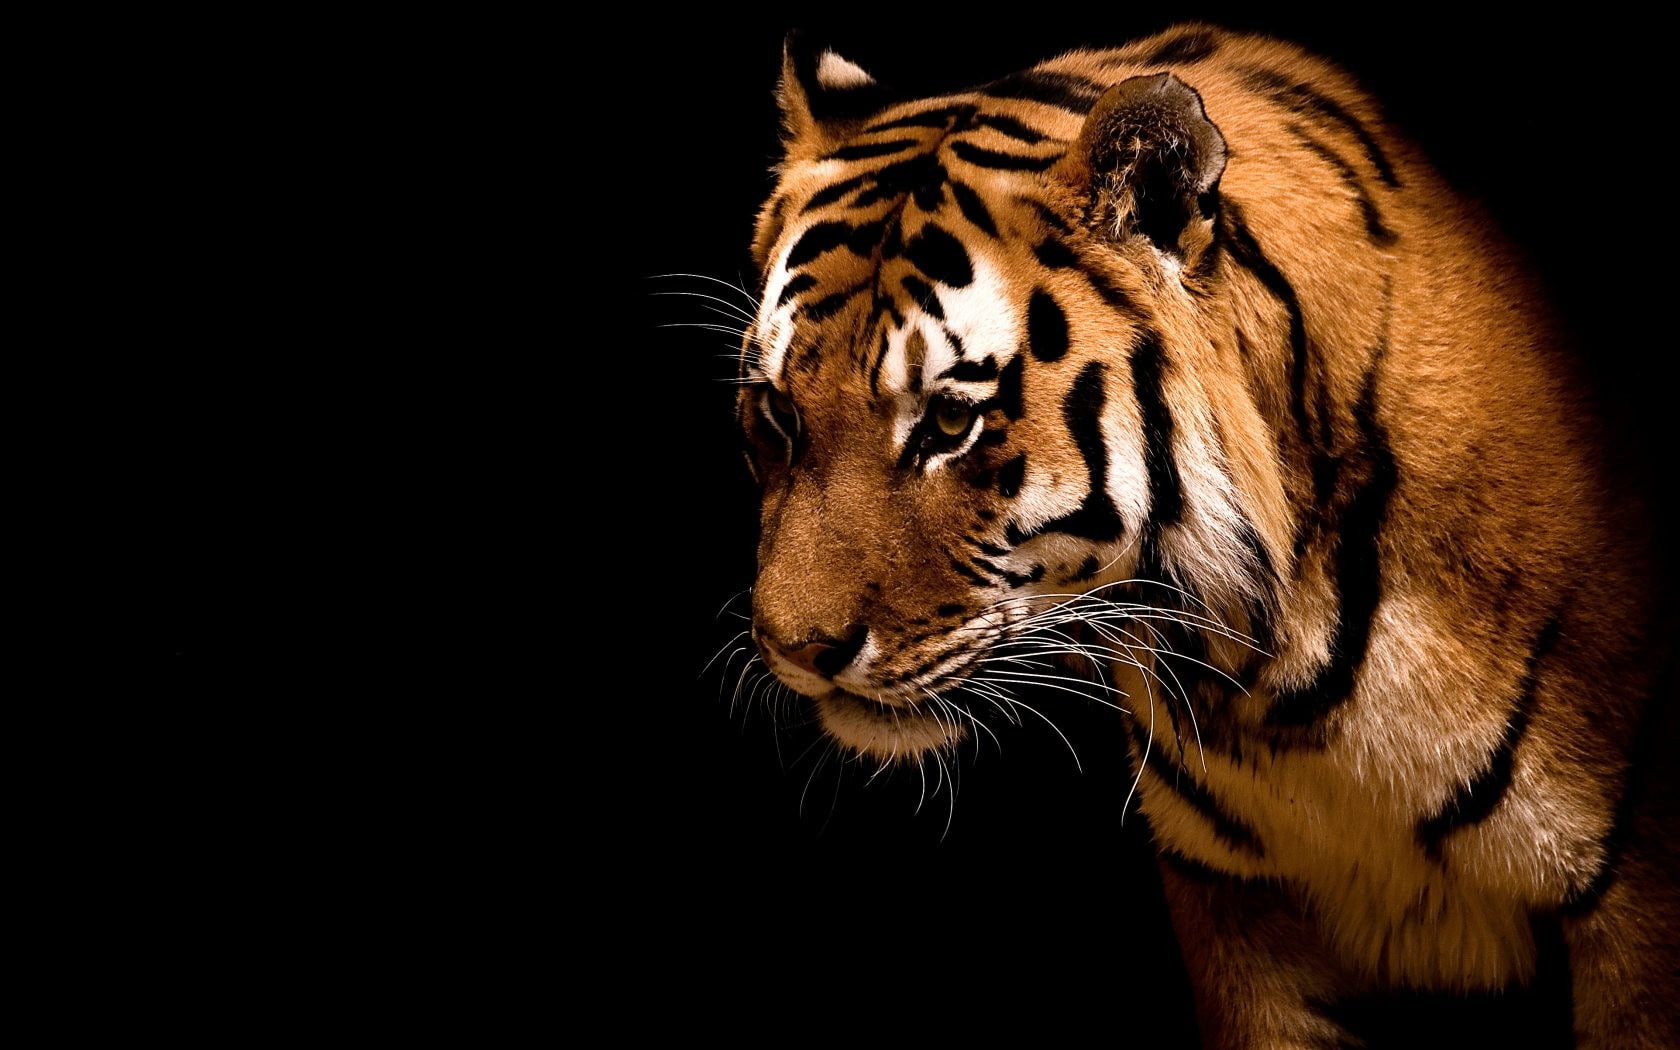 tiger, animals, big cats, animal themes, one animal, animal wildlife